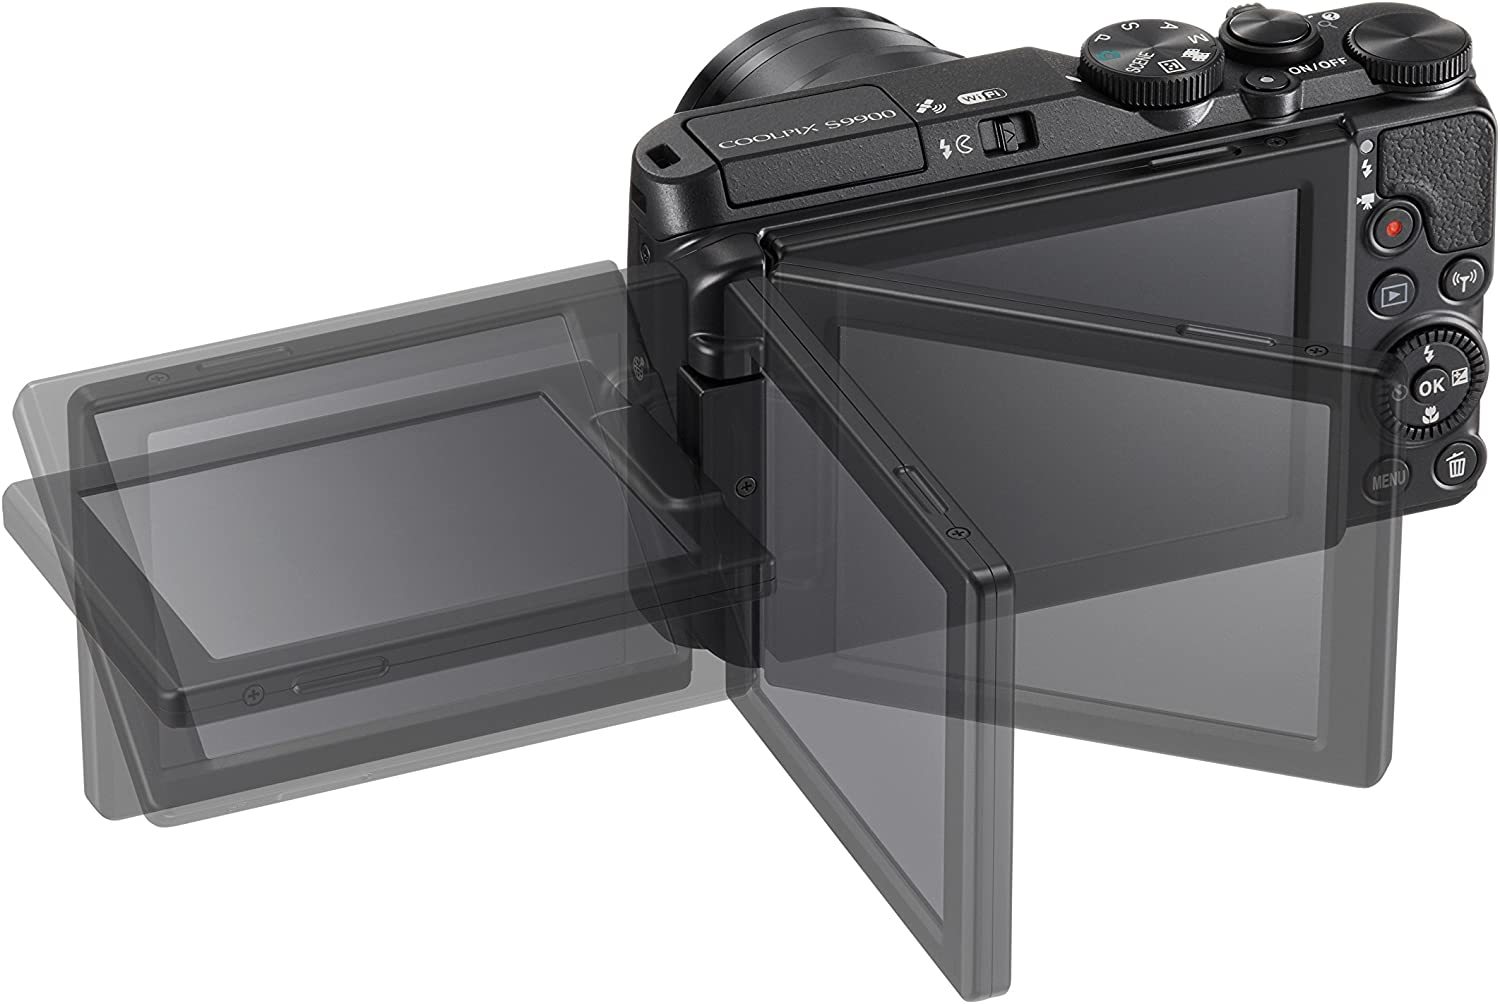 Black Nikon Coolpix S9900 Digital Camera and similar items